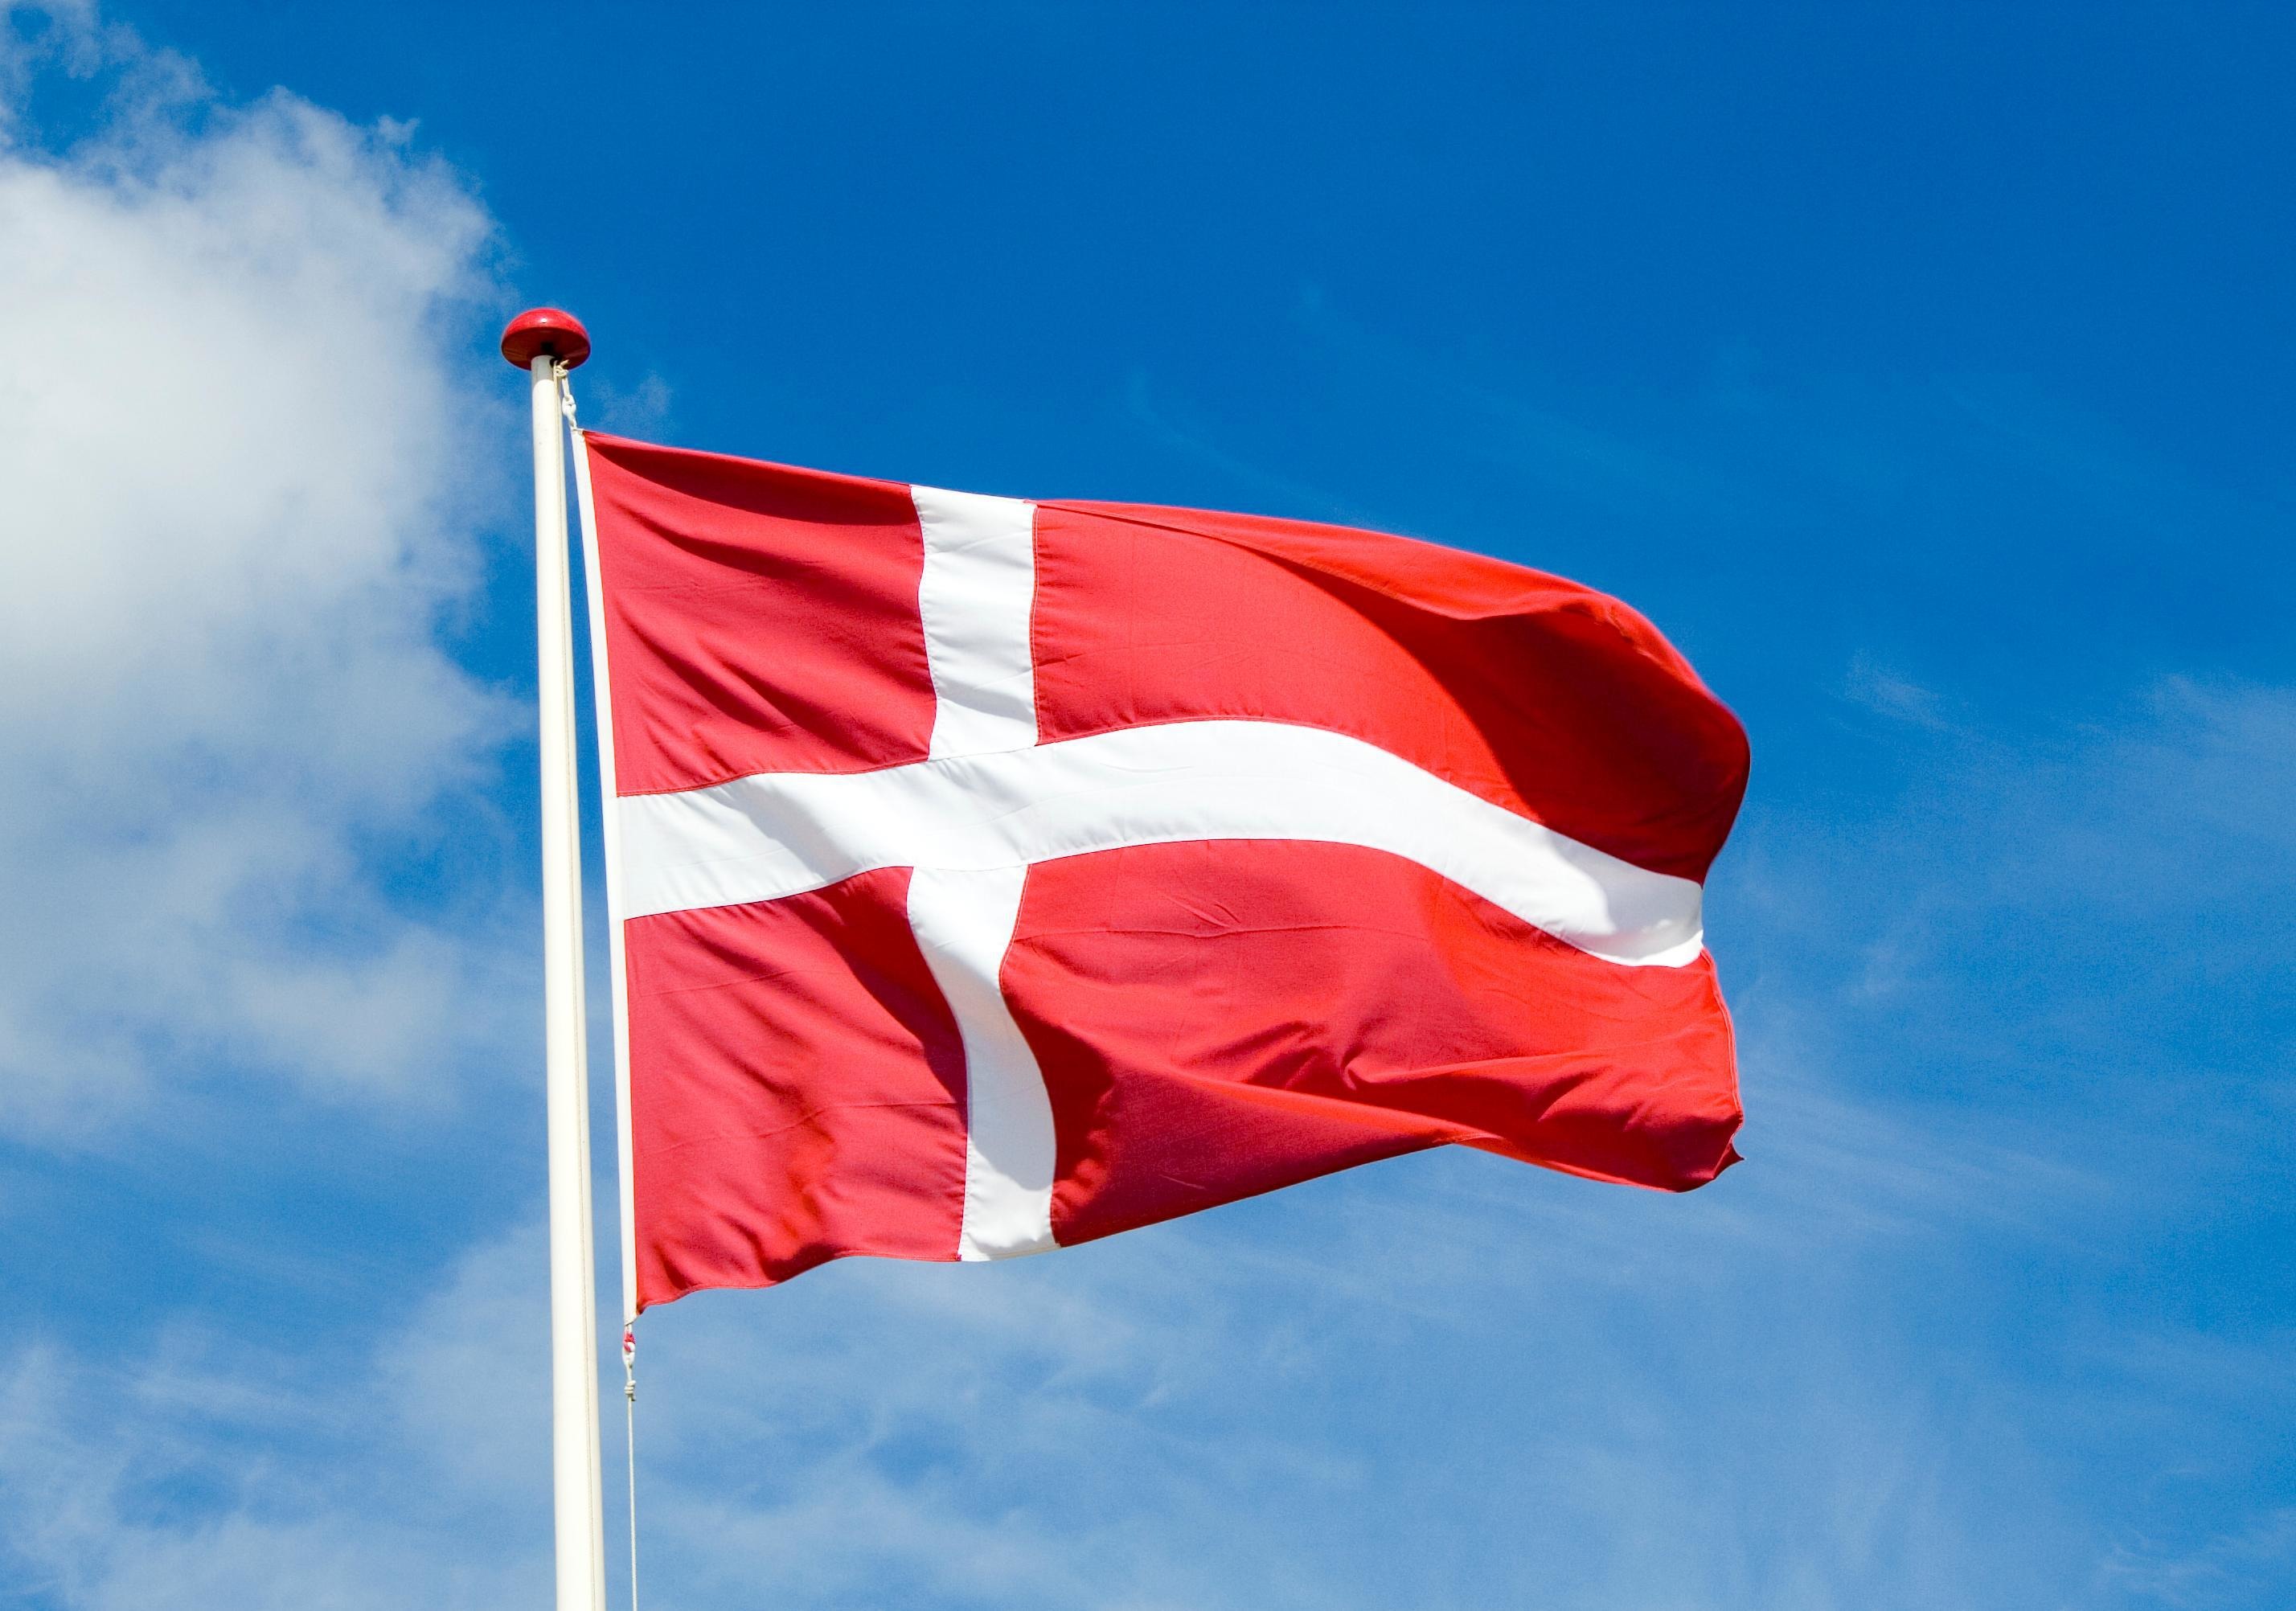 Картинки флагов. Флаг Дании. Данмарк флаг. Флаг флаг Дании. Королевство Дания флаг.